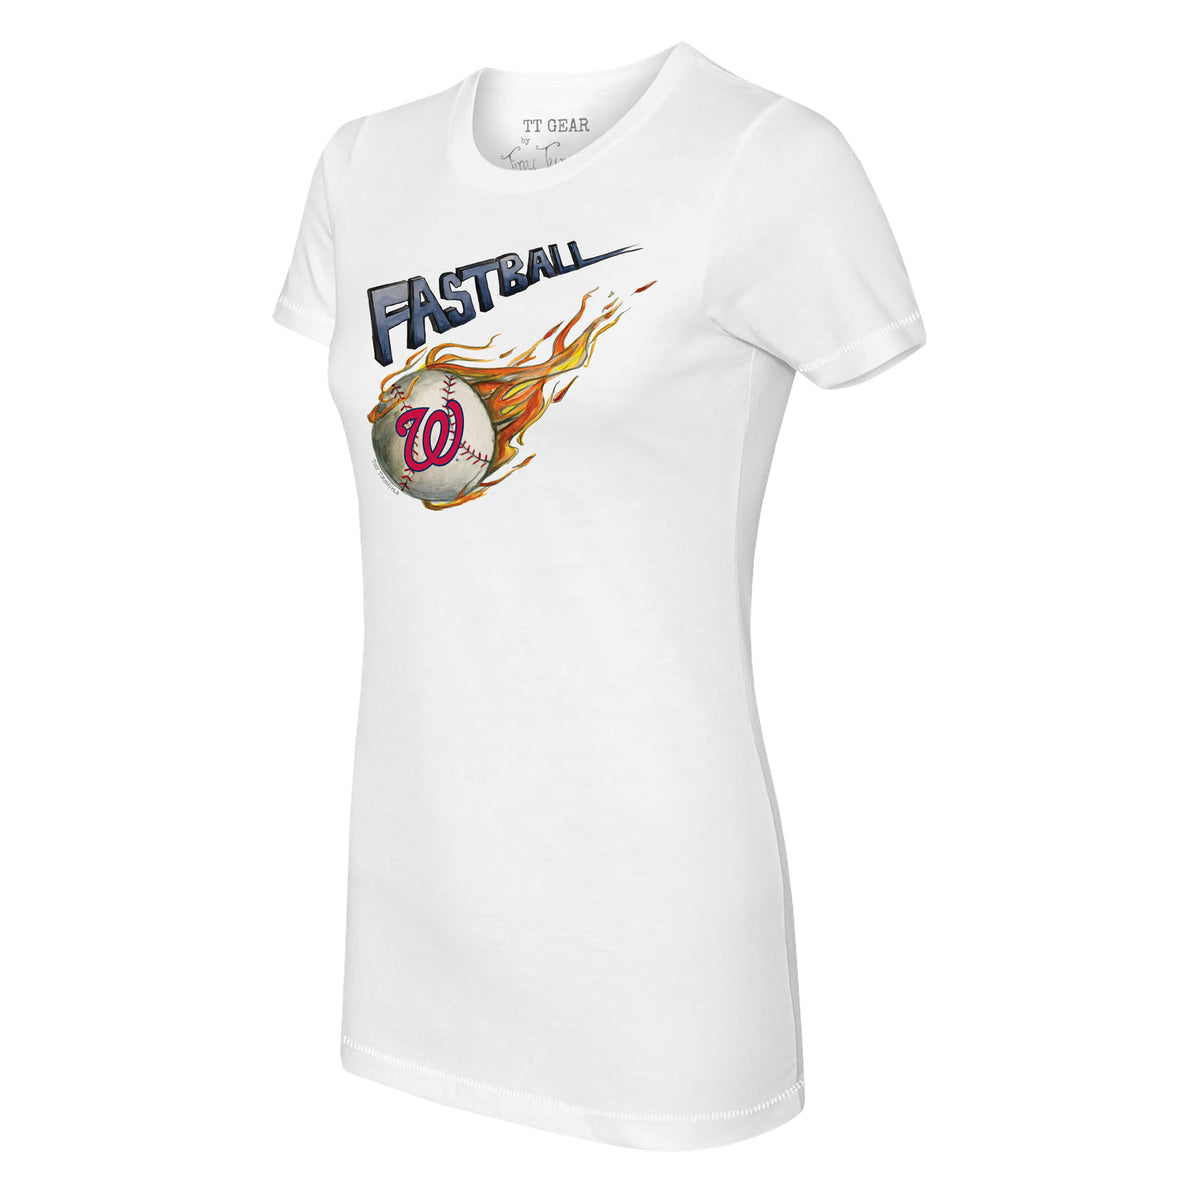 Washington Nationals Fastball Tee Shirt